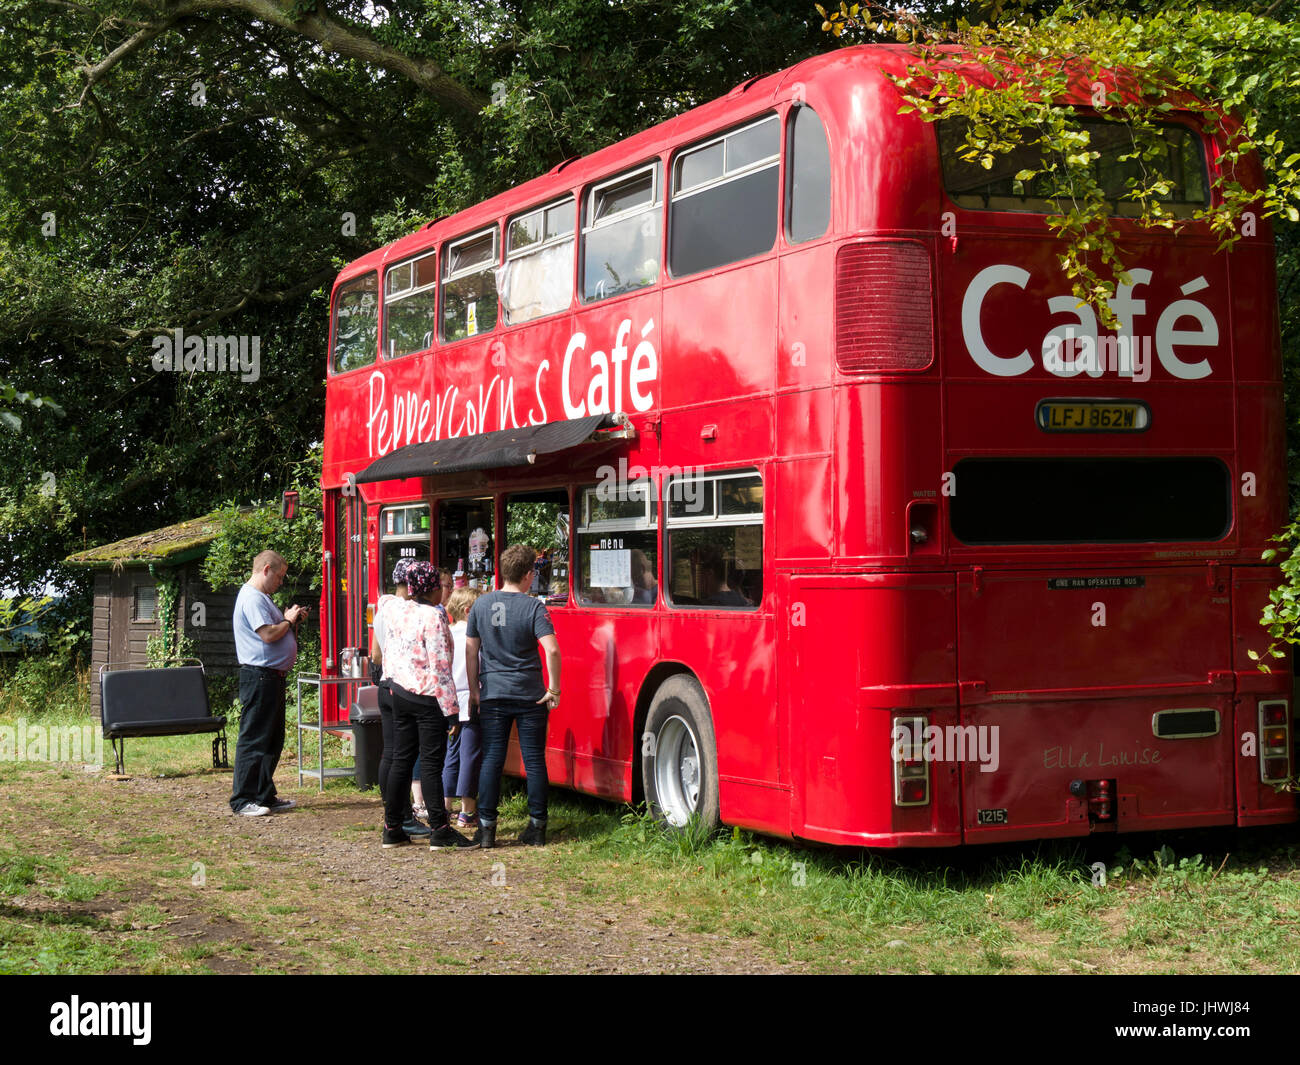 Vecchio, big red London double-decker bus Routemaster convertito a mobile cafe. Foto Stock